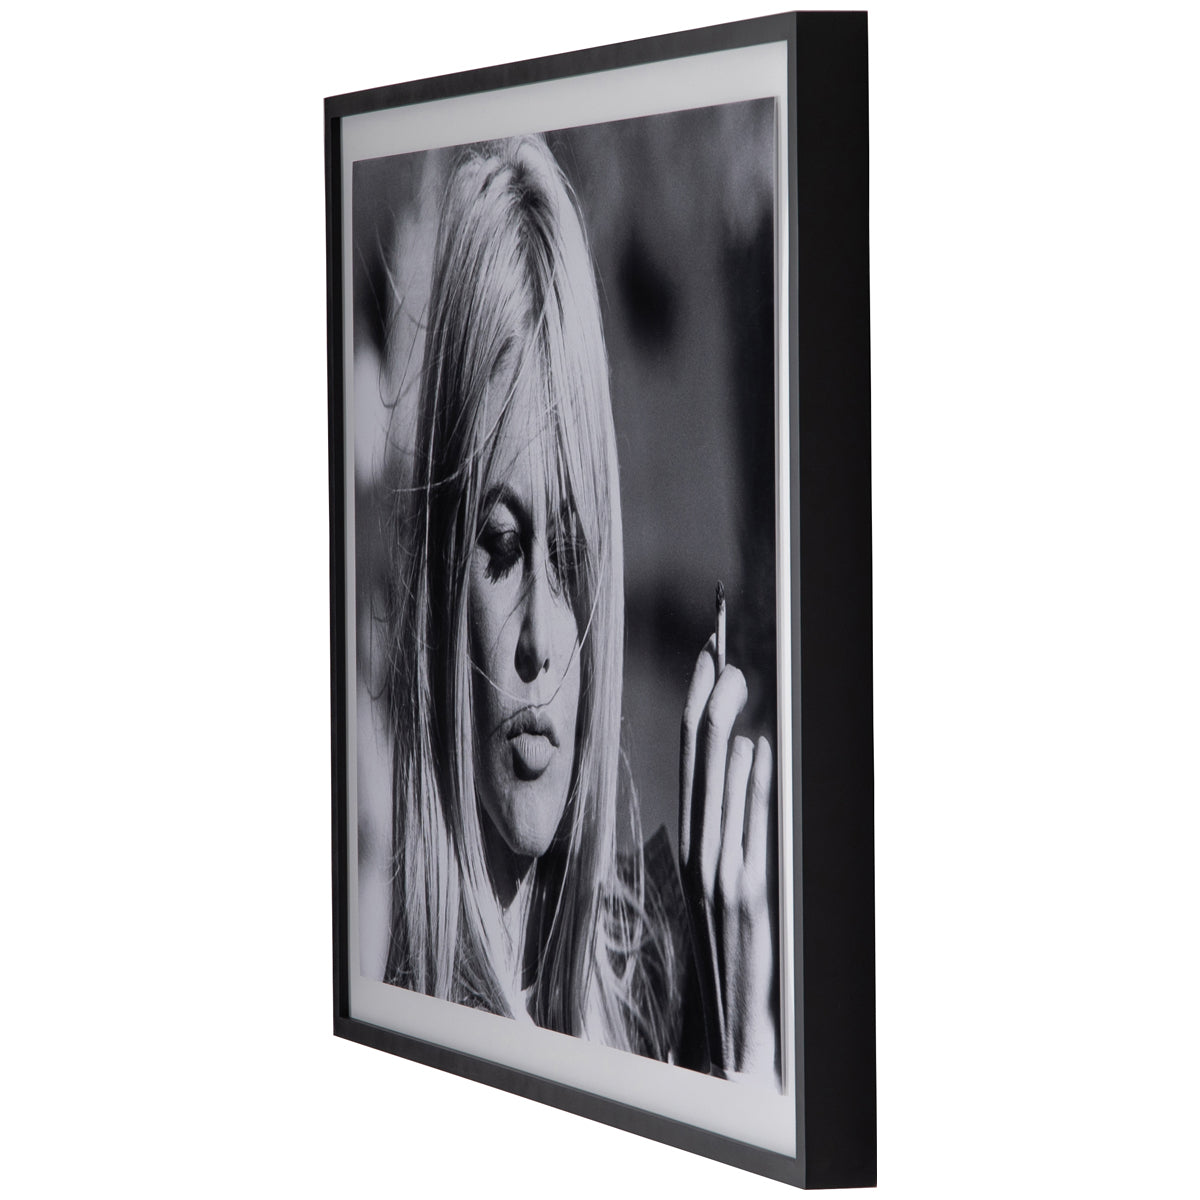 Four Hands Art Studio Brigitte Bardot by Getty Images